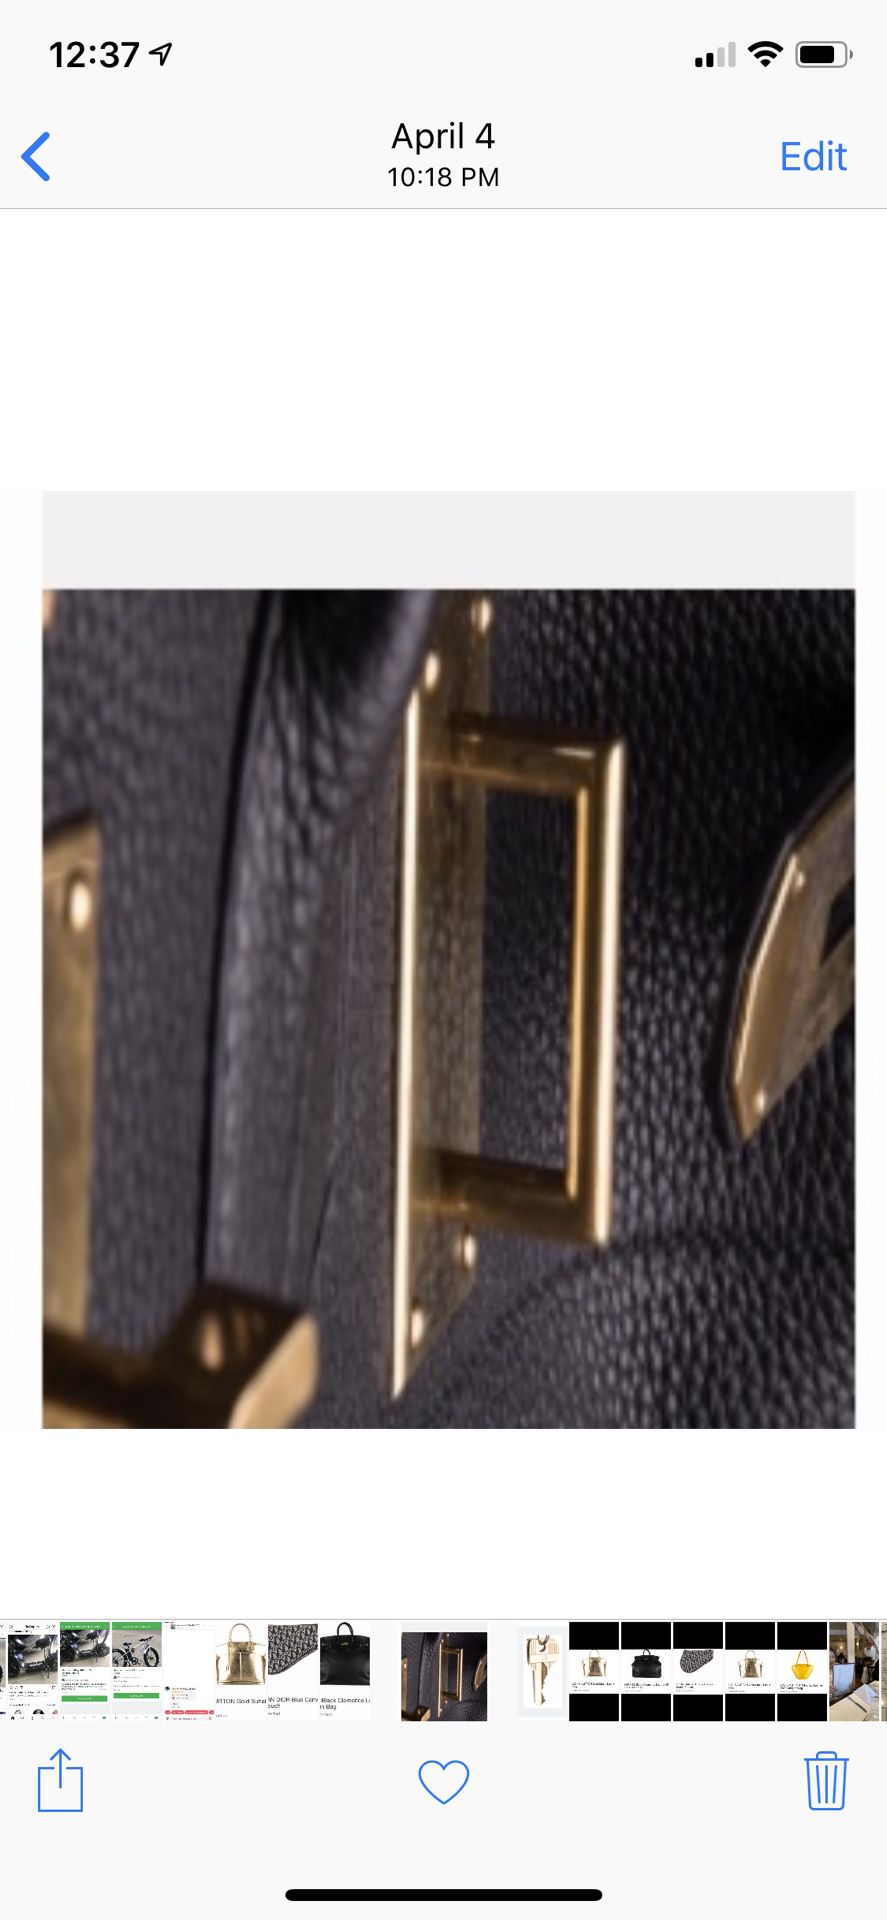 Hermes Clemence HAC Birkin 50 Bag,luggage,backpack,duffle,belt,Oran Sandals